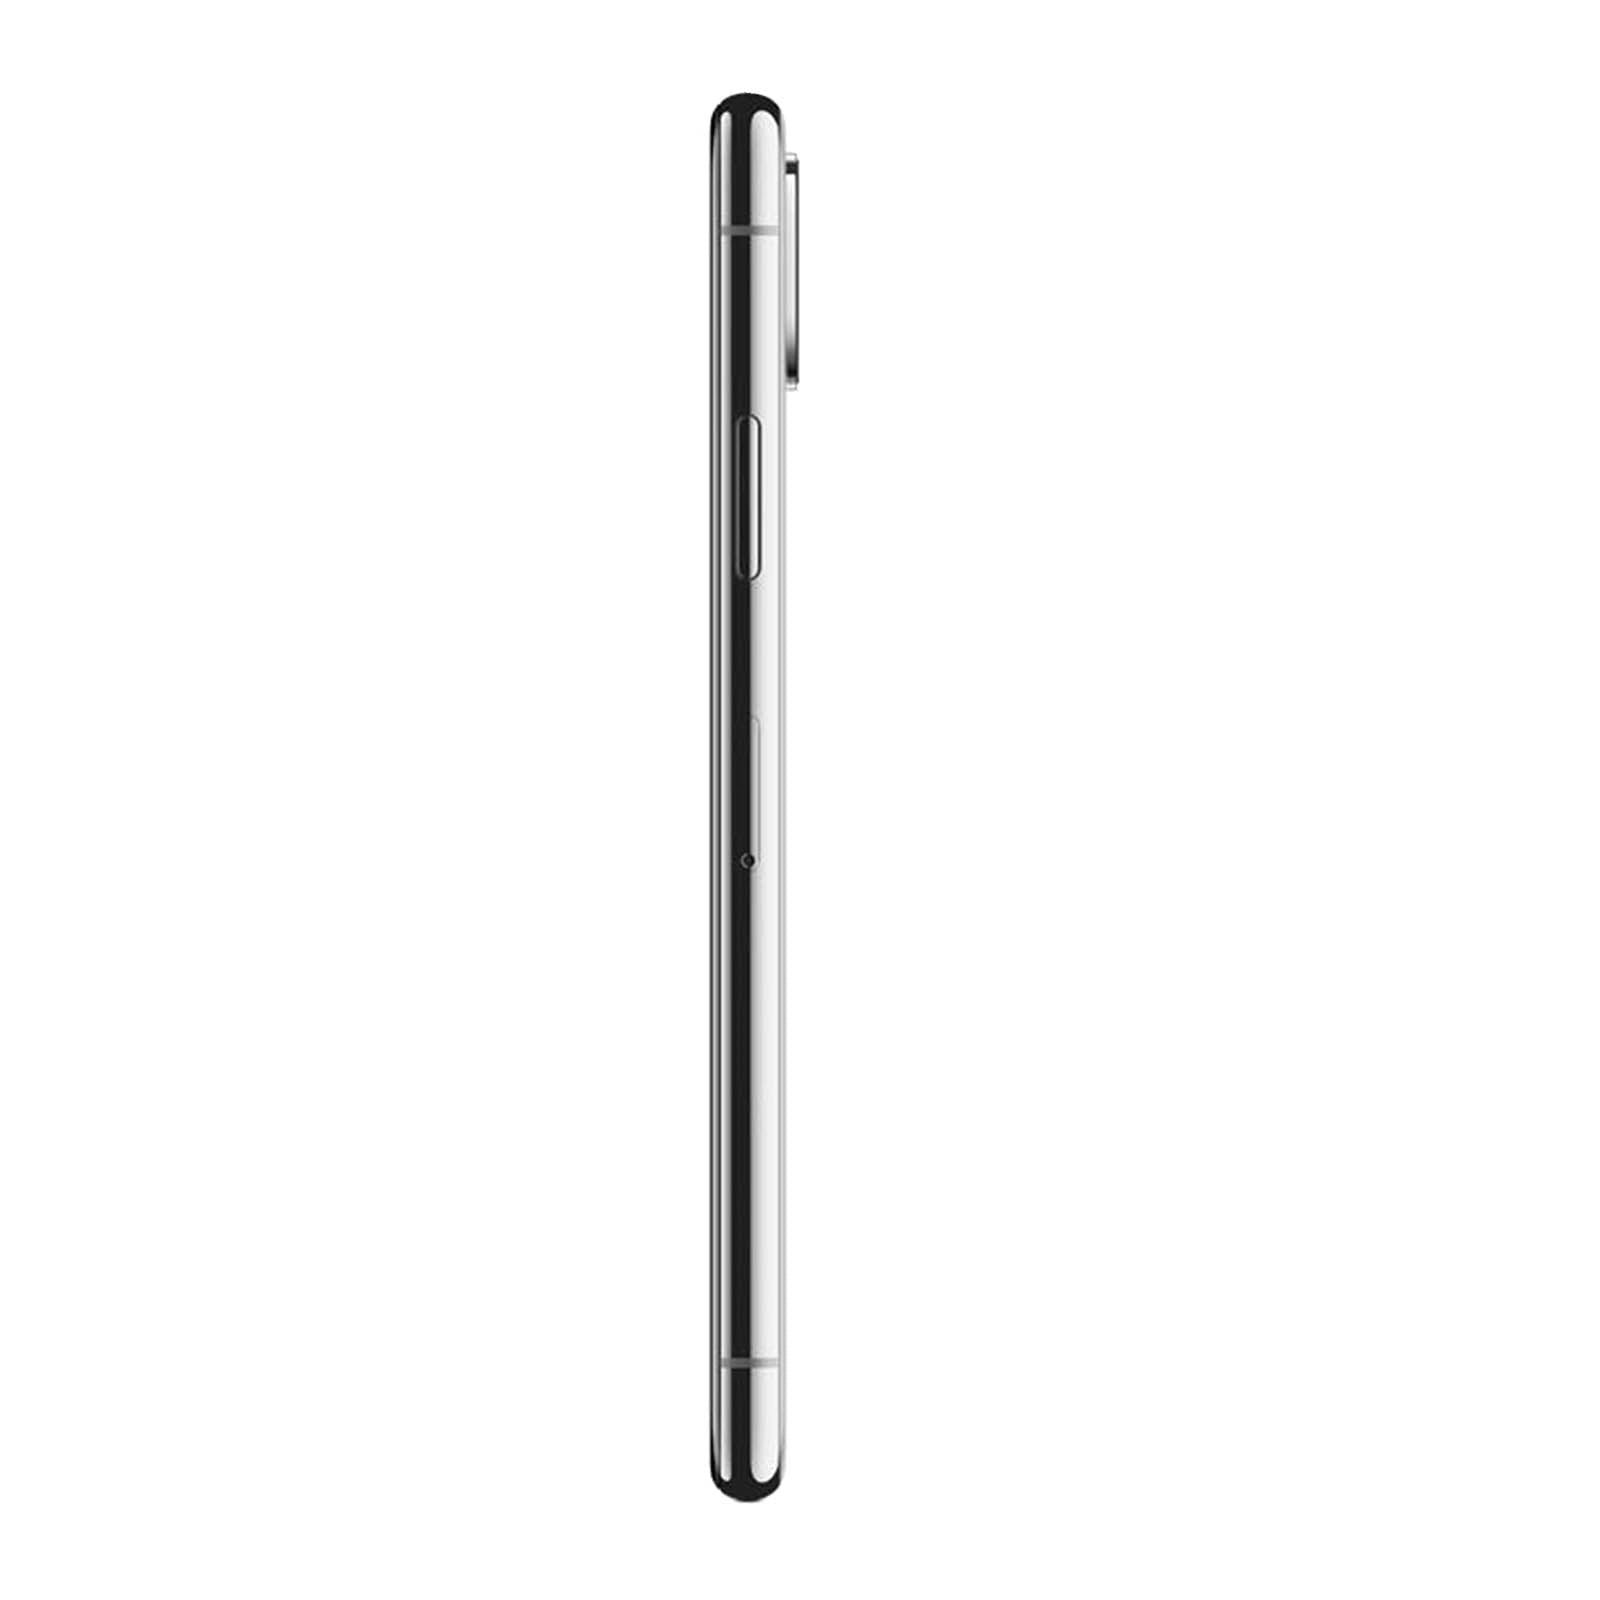 Apple iPhone XS Max 64GB Silver Fair - Verizon